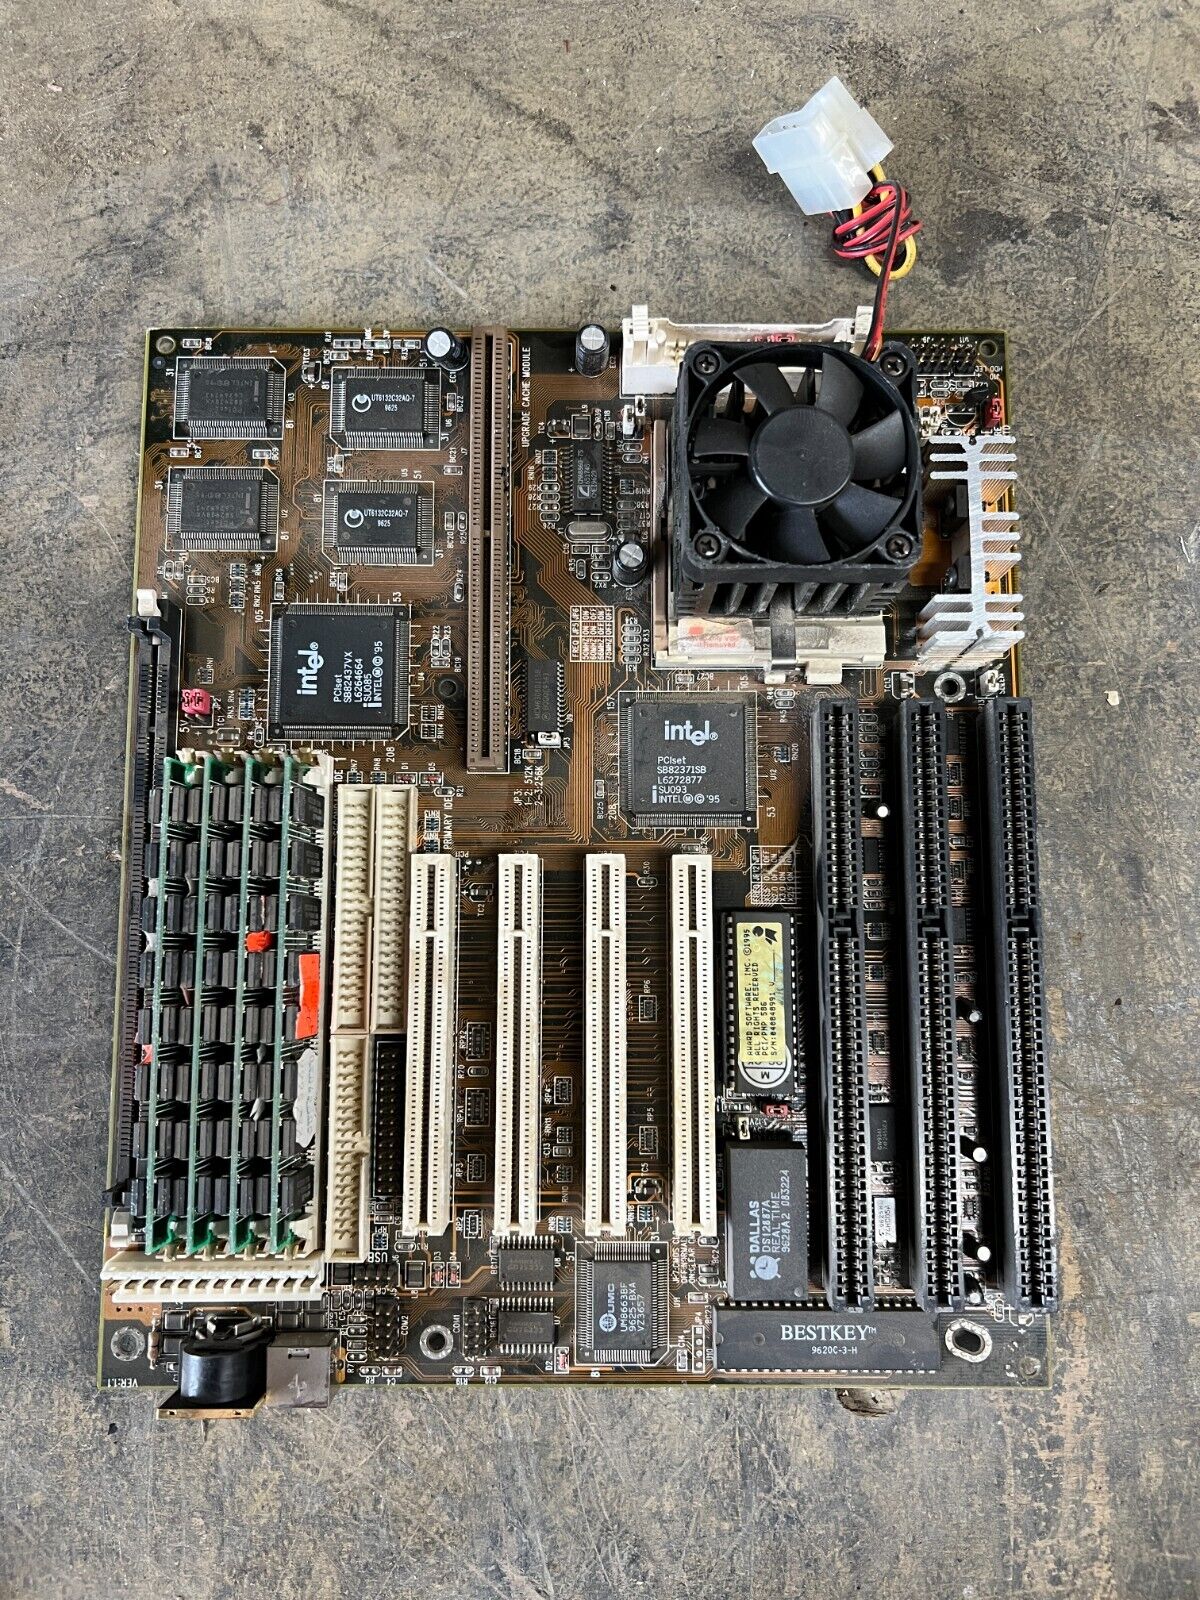 MB-8500TUC-A Socket 7 Motherboard IBM 6X86 P150+ 120MHz 80MB RAM 4x ISA 